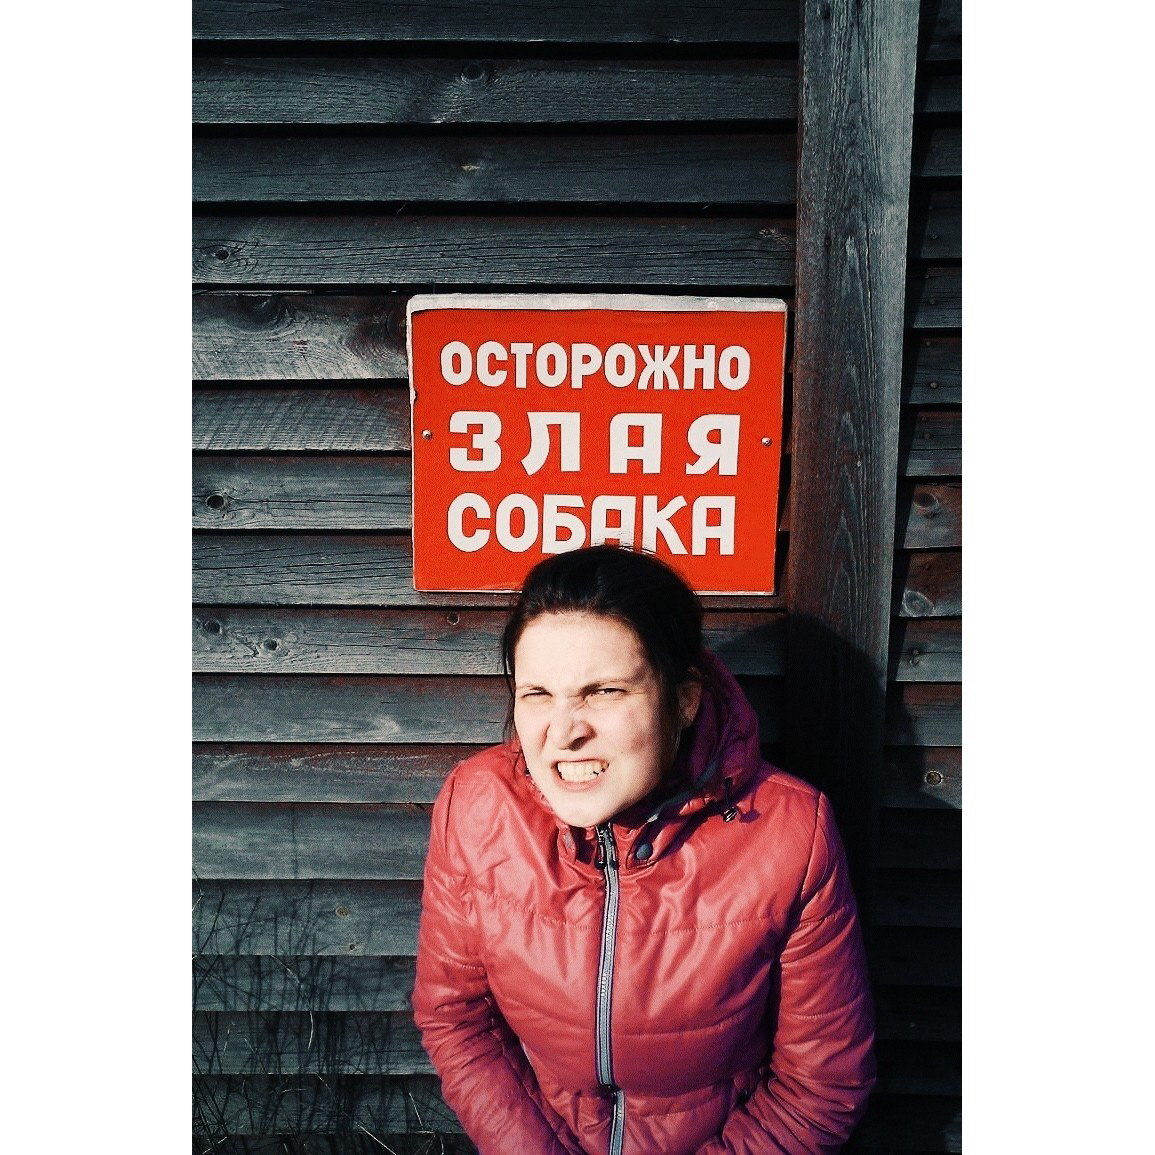 mobilephoto instagram vscocam fotosonya crime Russia Easter family live